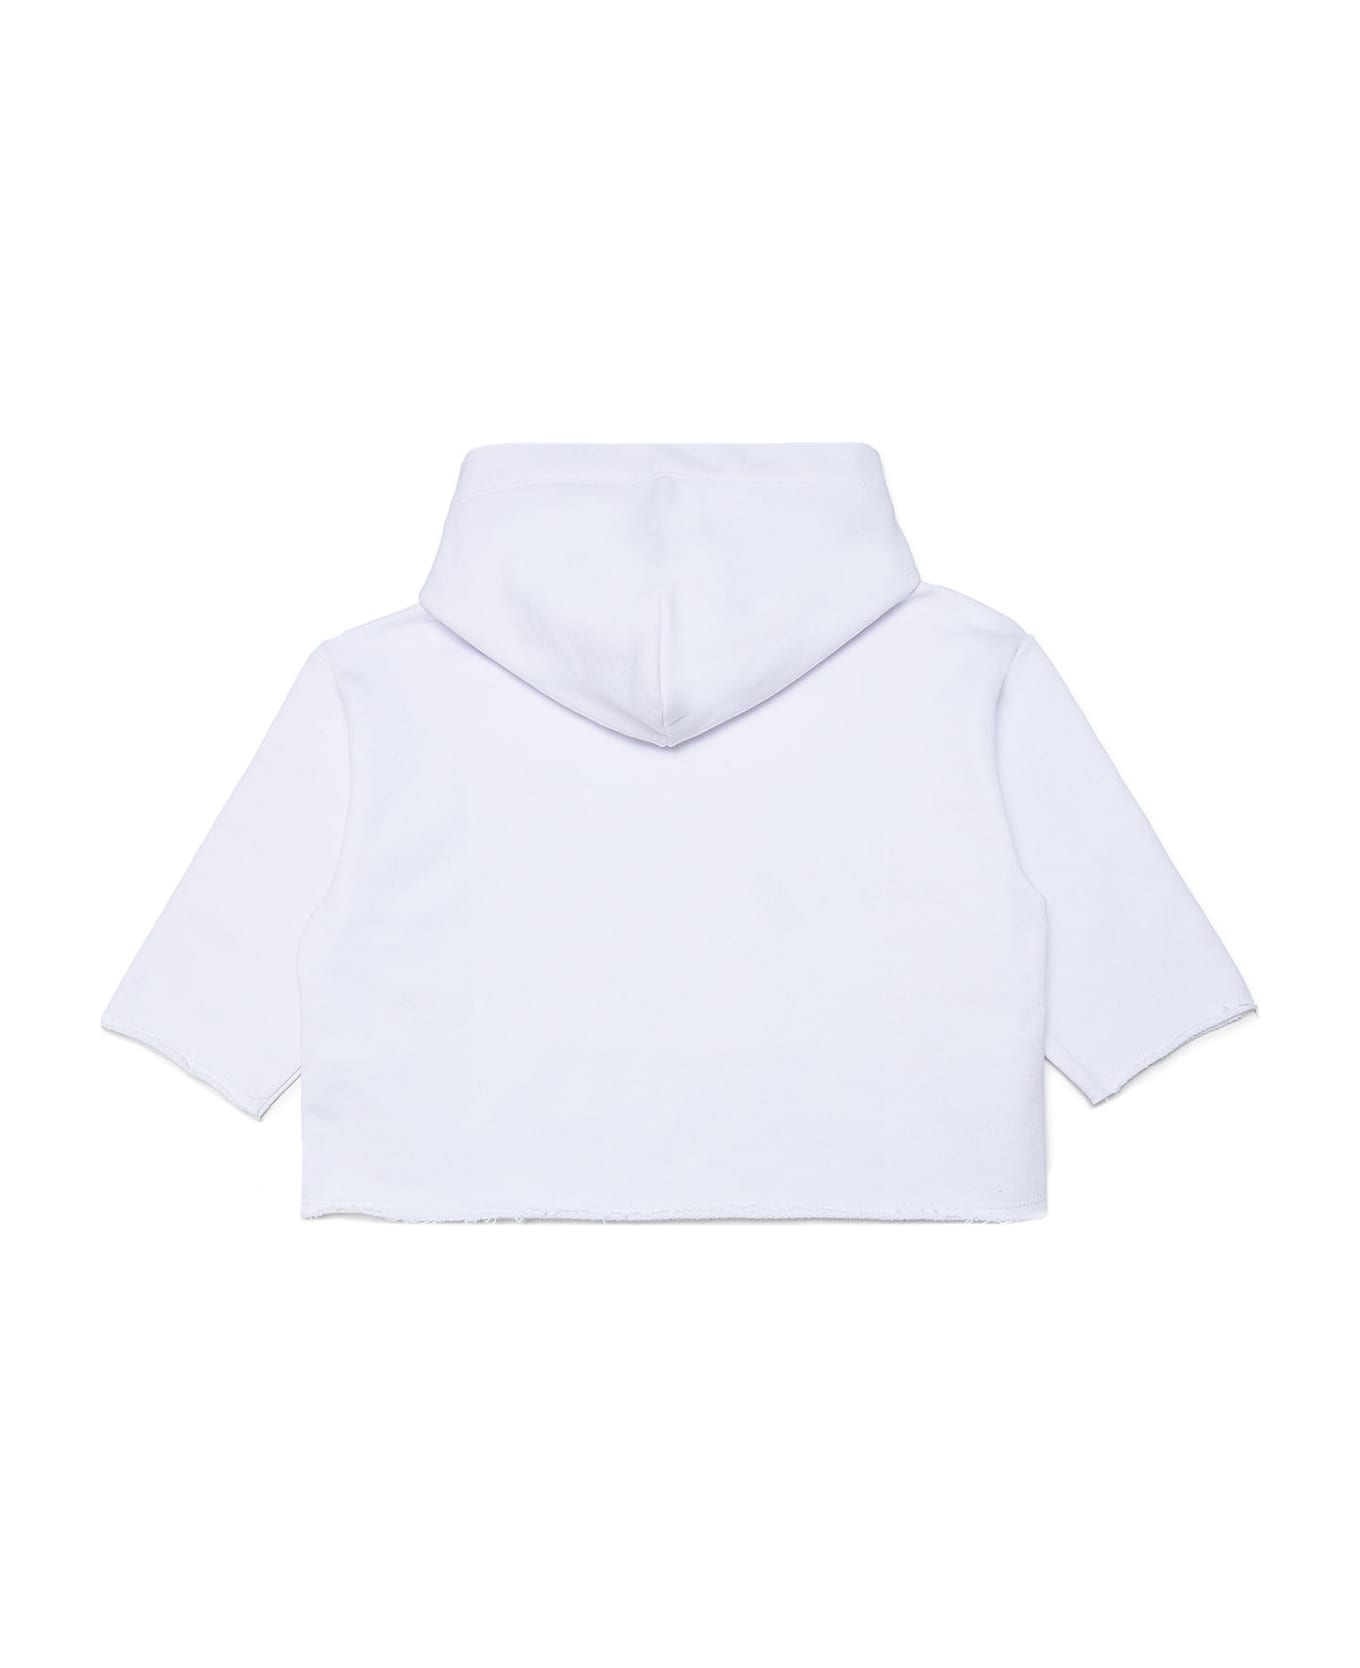 MM6 Maison Margiela Sweatshirt With Print - White